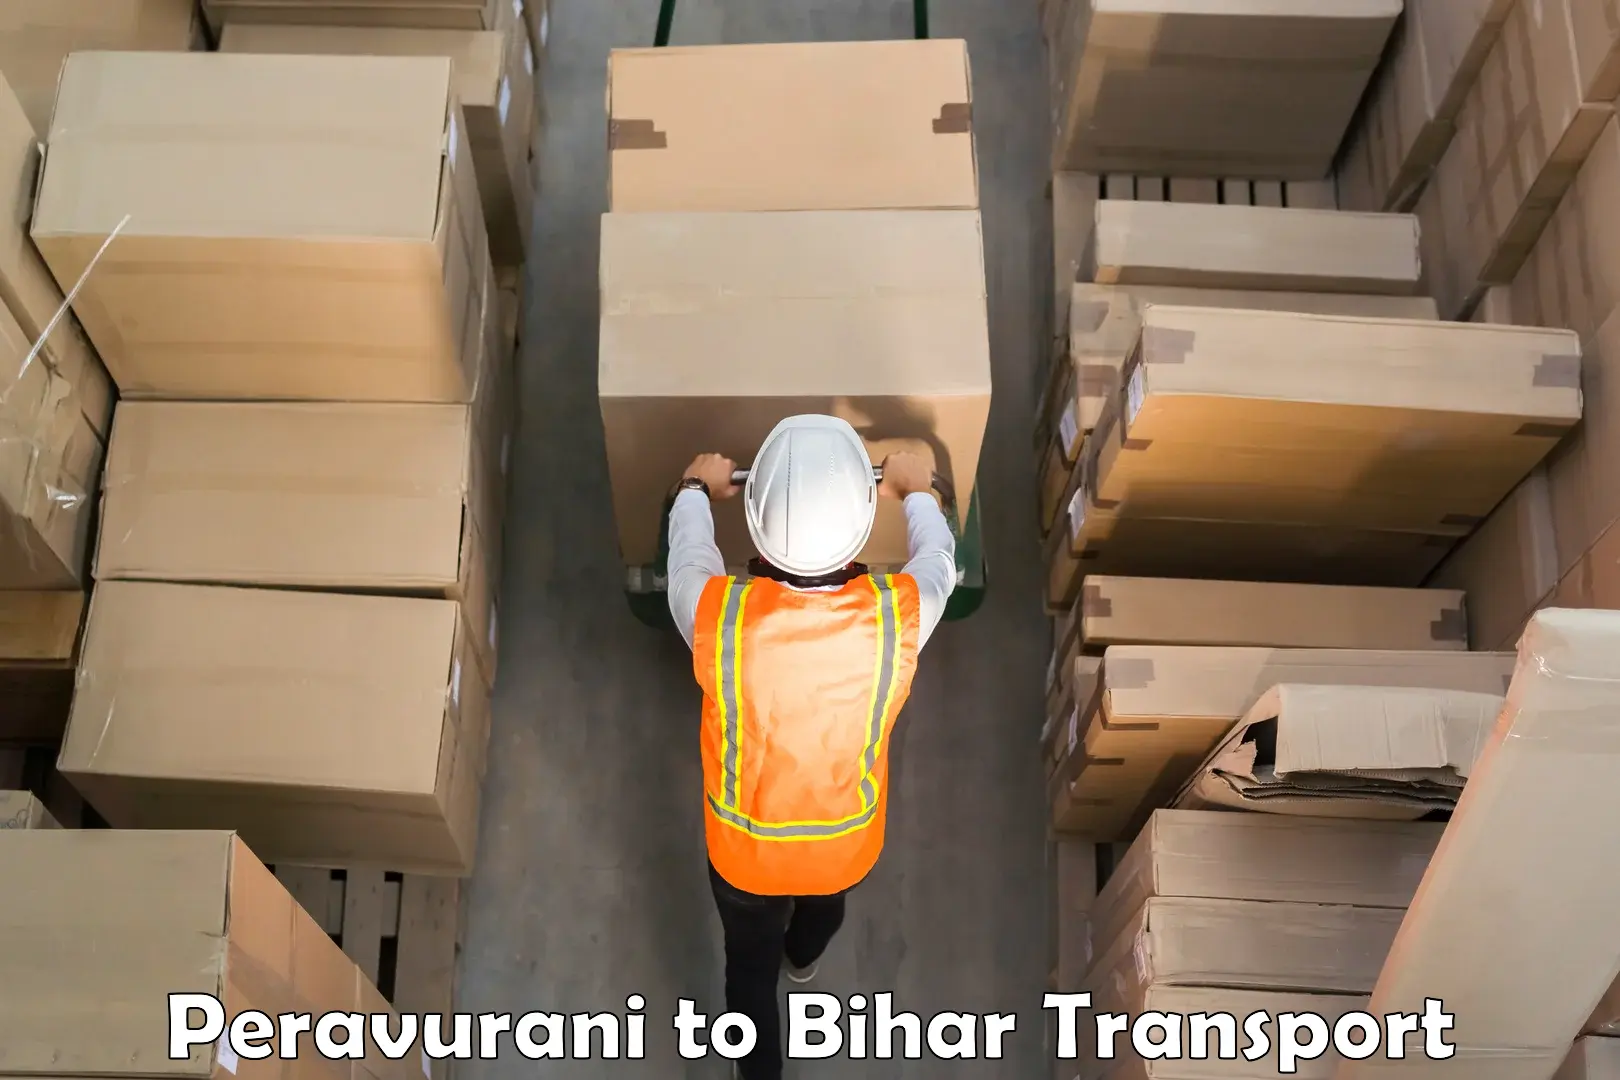 Commercial transport service Peravurani to Bihar